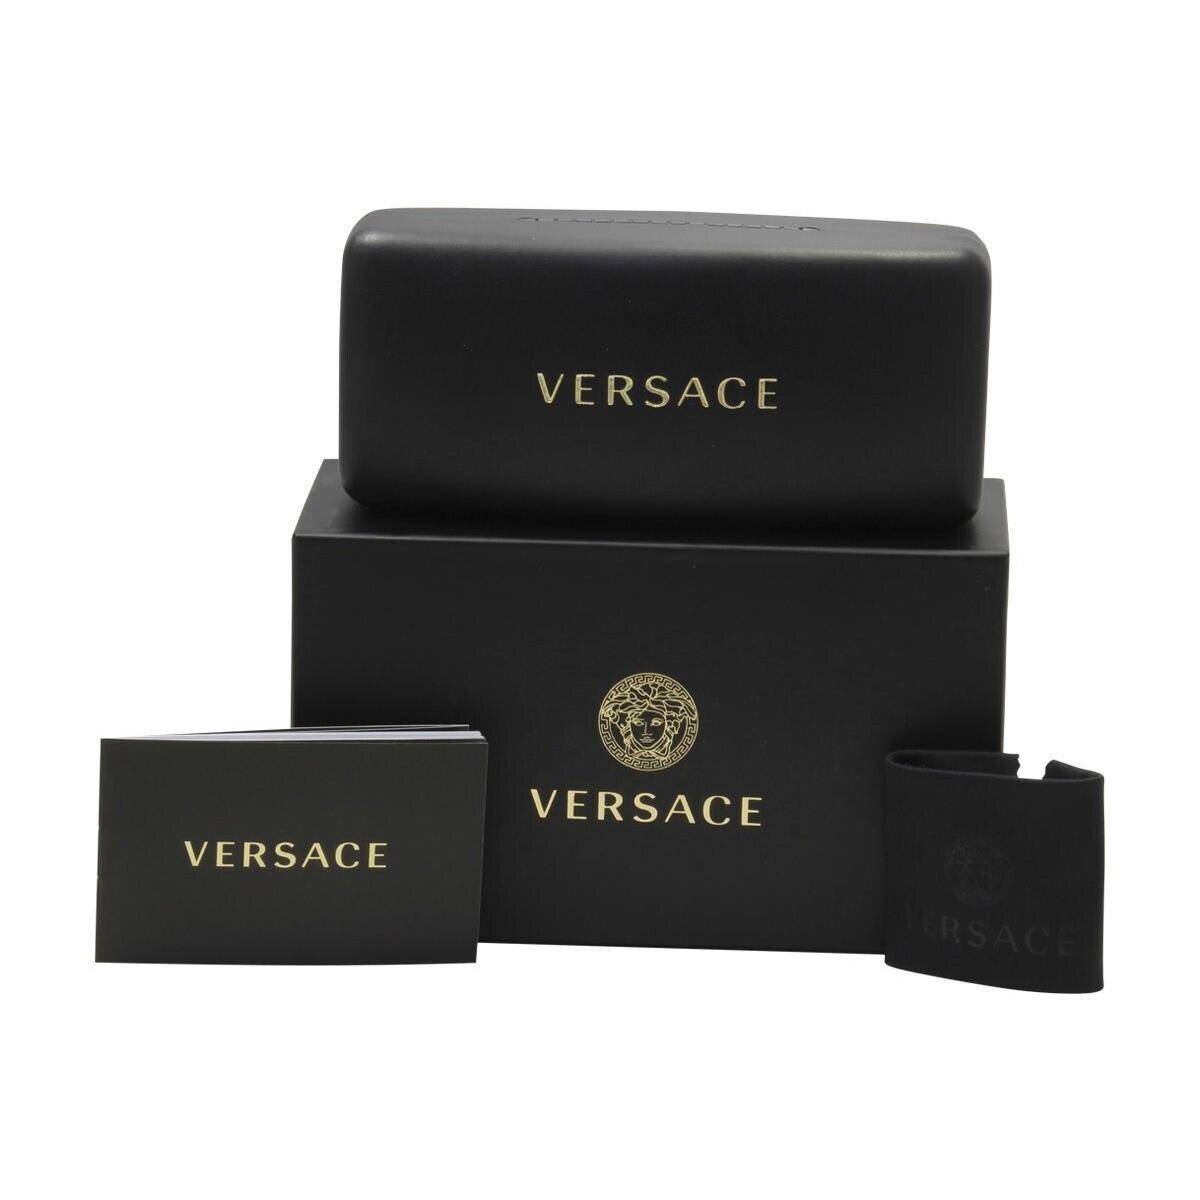 Versace sunglasses  - Honey Mustard Frame, Brown Lens 9